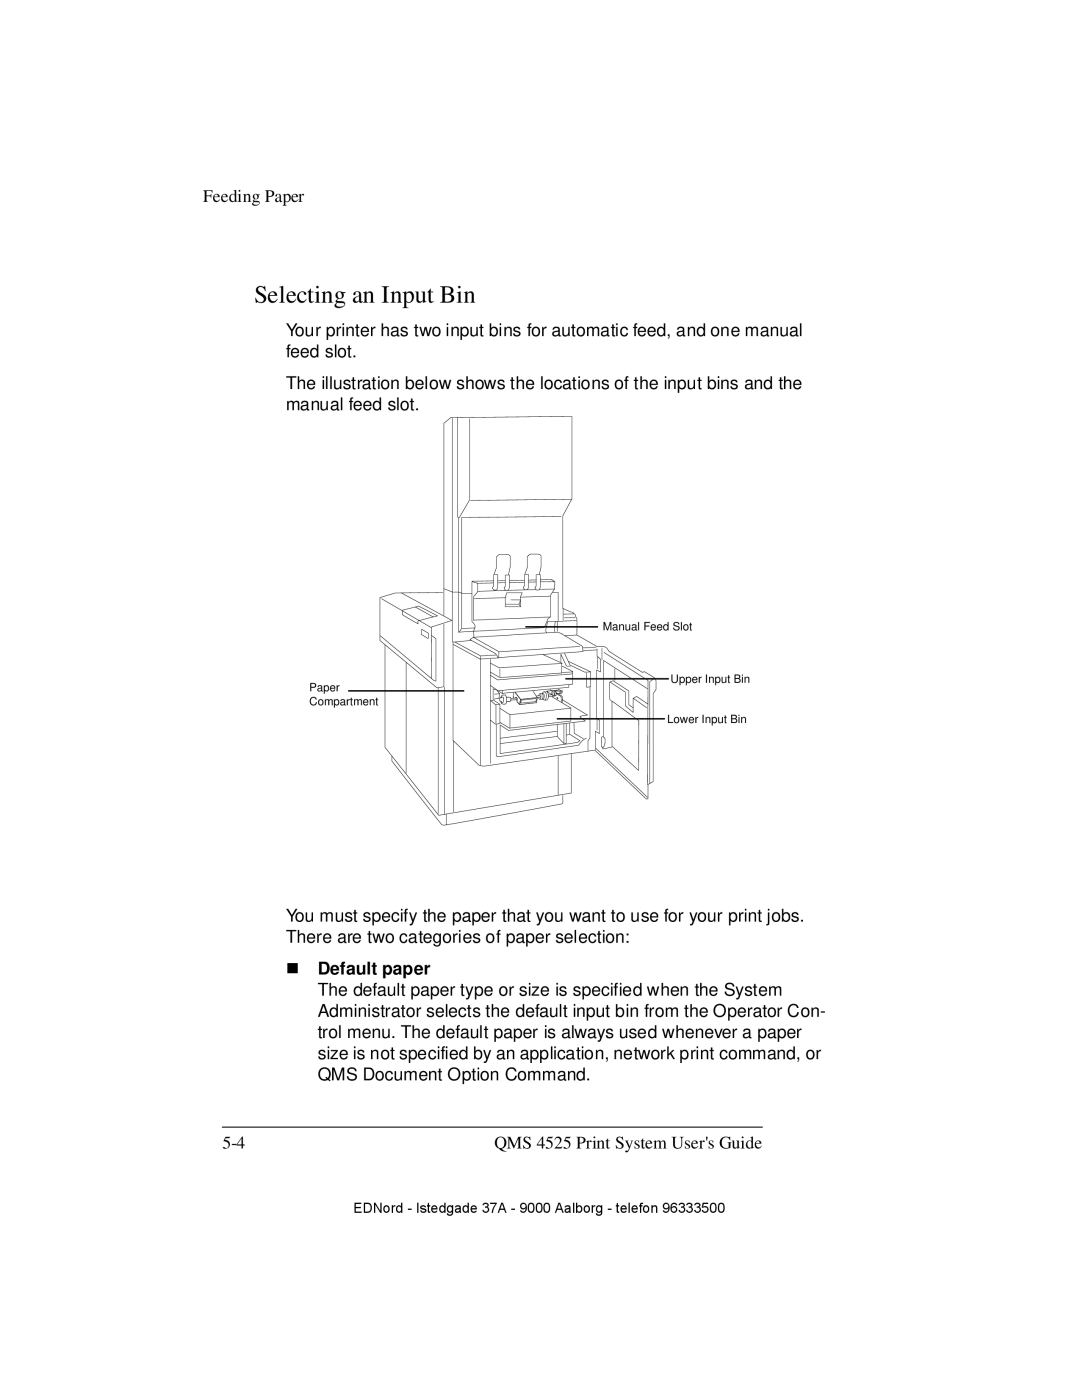 IBM QMS 4525 manual Selecting an Input Bin, „ Default paper 